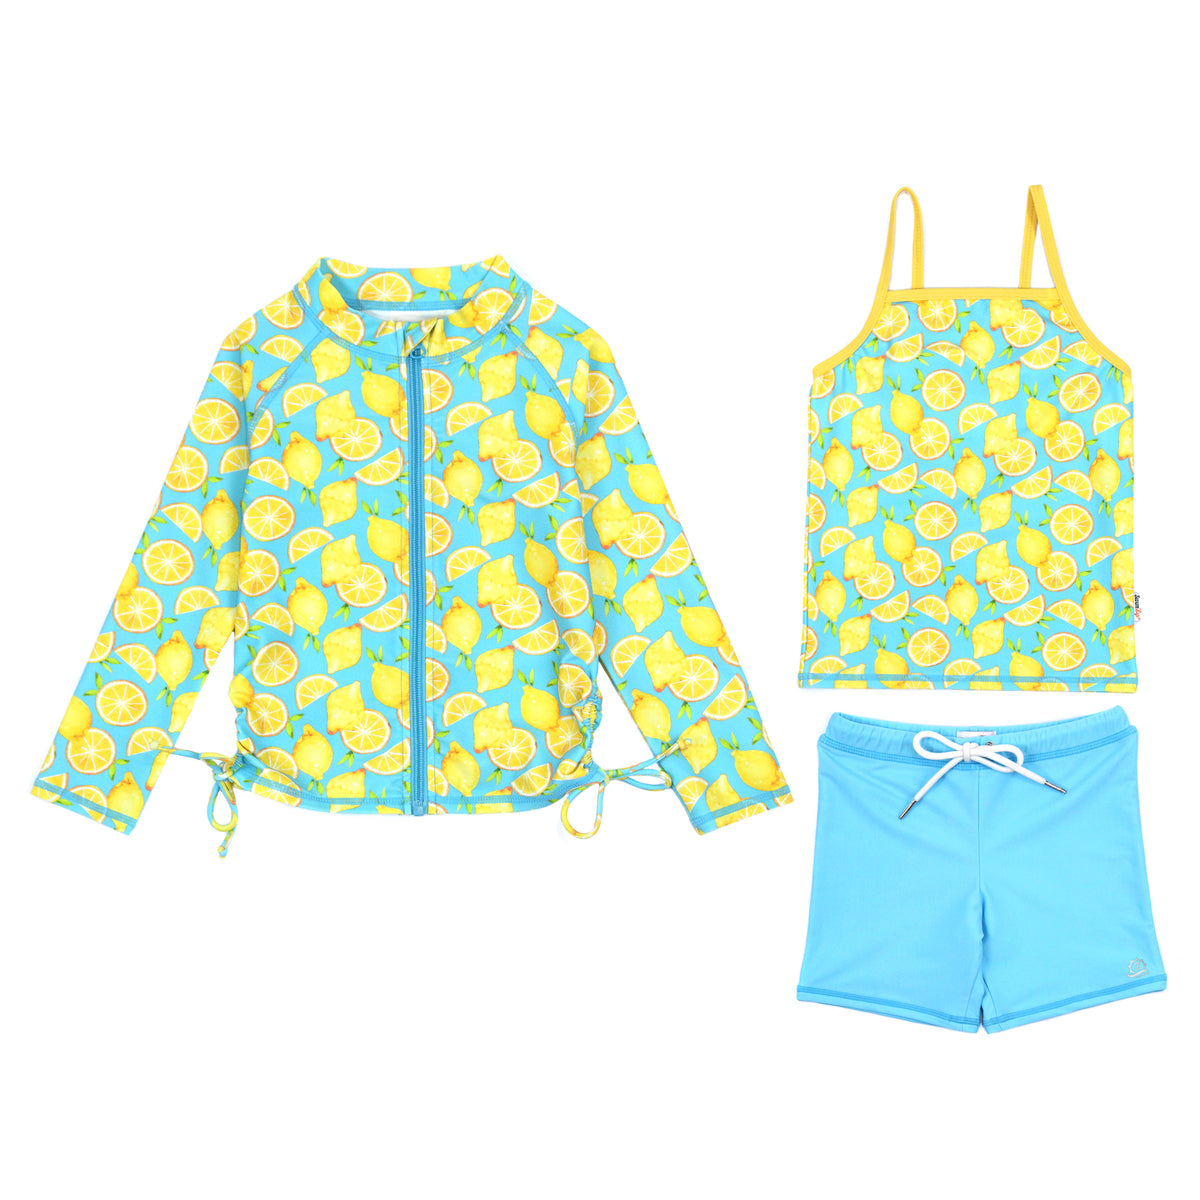 Patterned Tankini and Swim Shorts Set for Girls